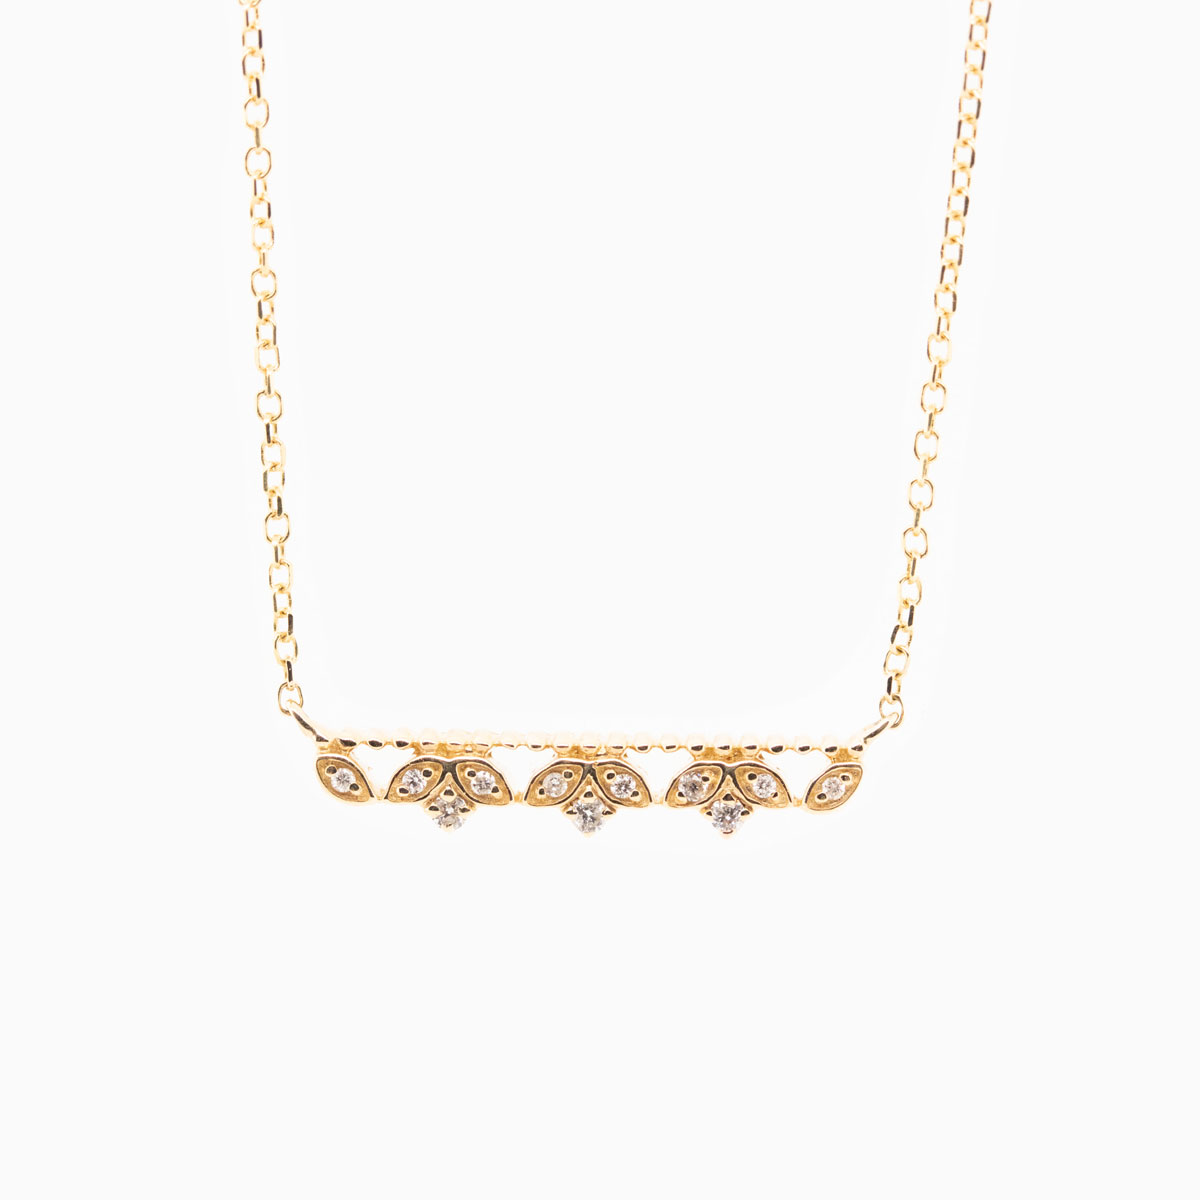 Petite Natural Diamond Bar Necklace with Floral Motif